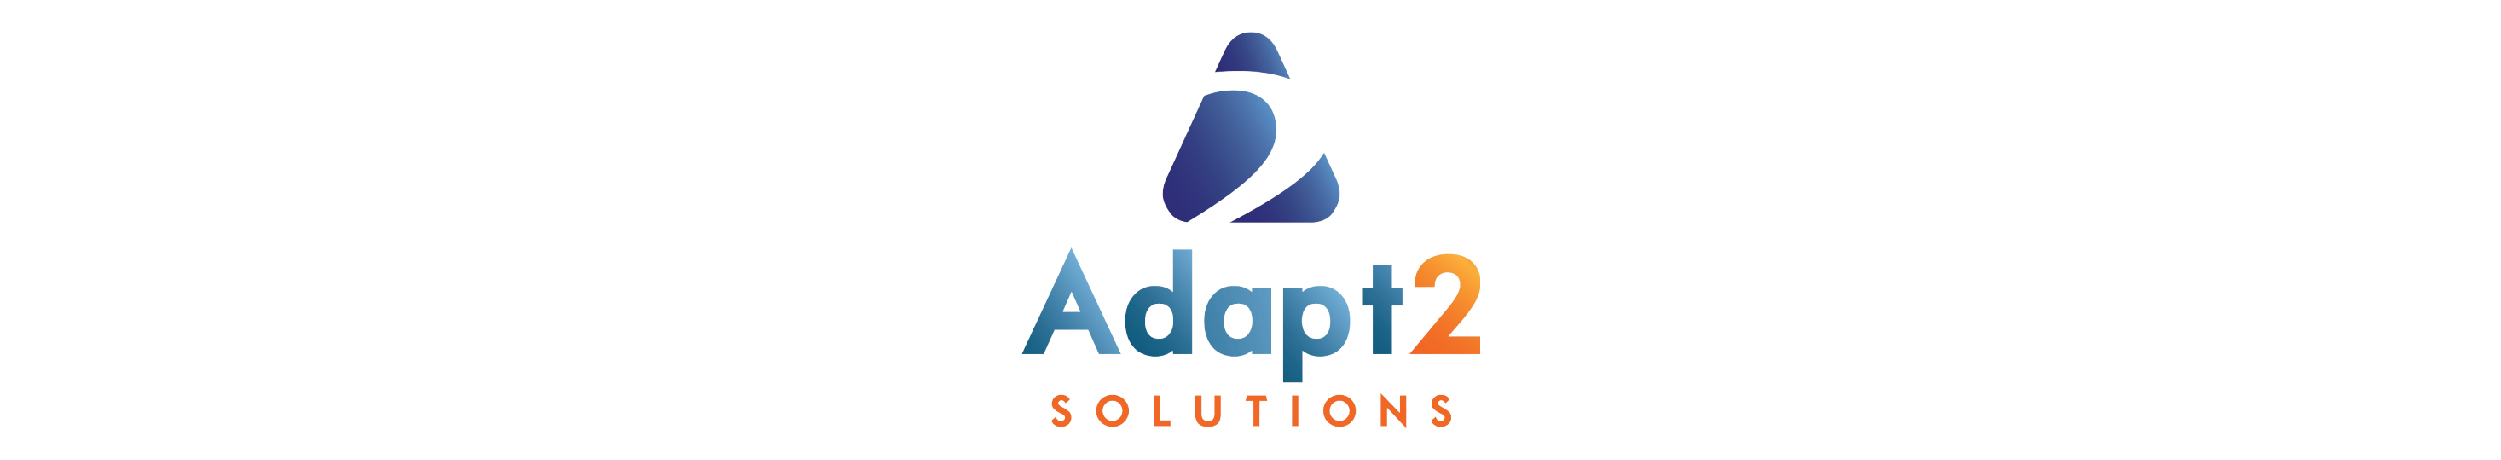 Adapt2 Solutions